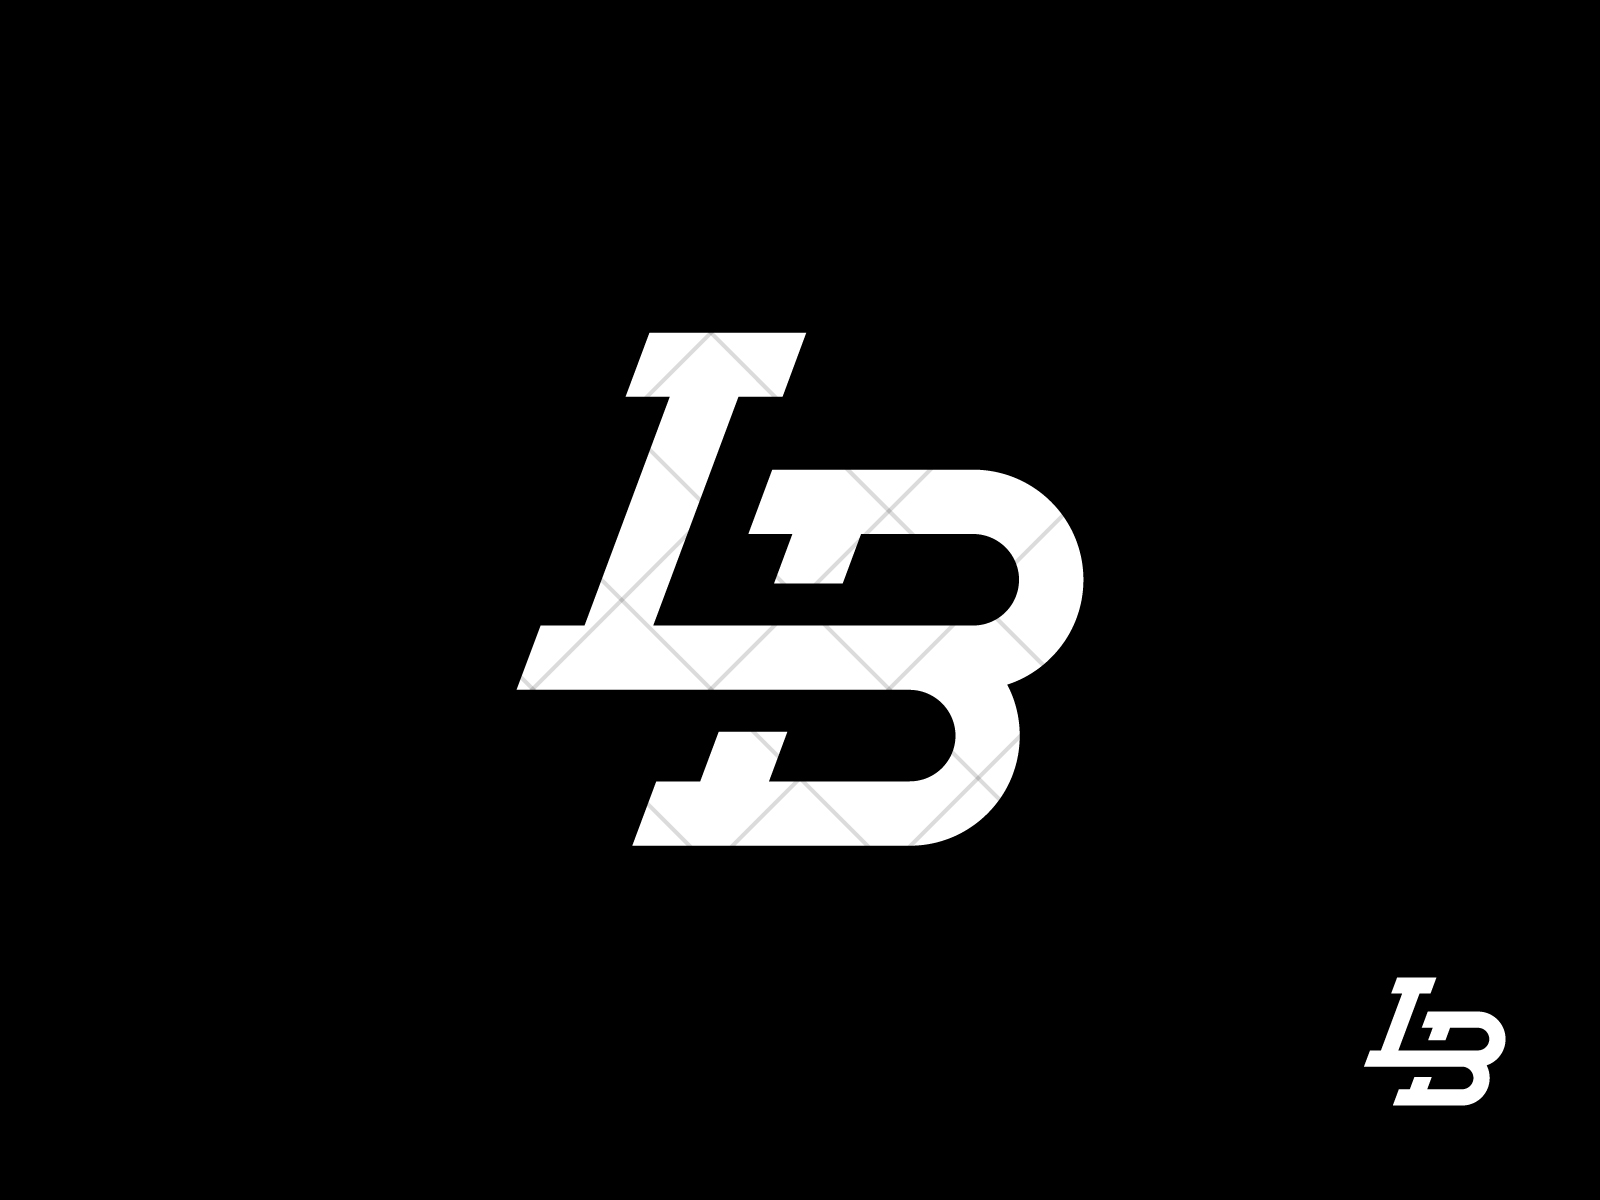 Letter lb beauty face initial logo design Vector Image